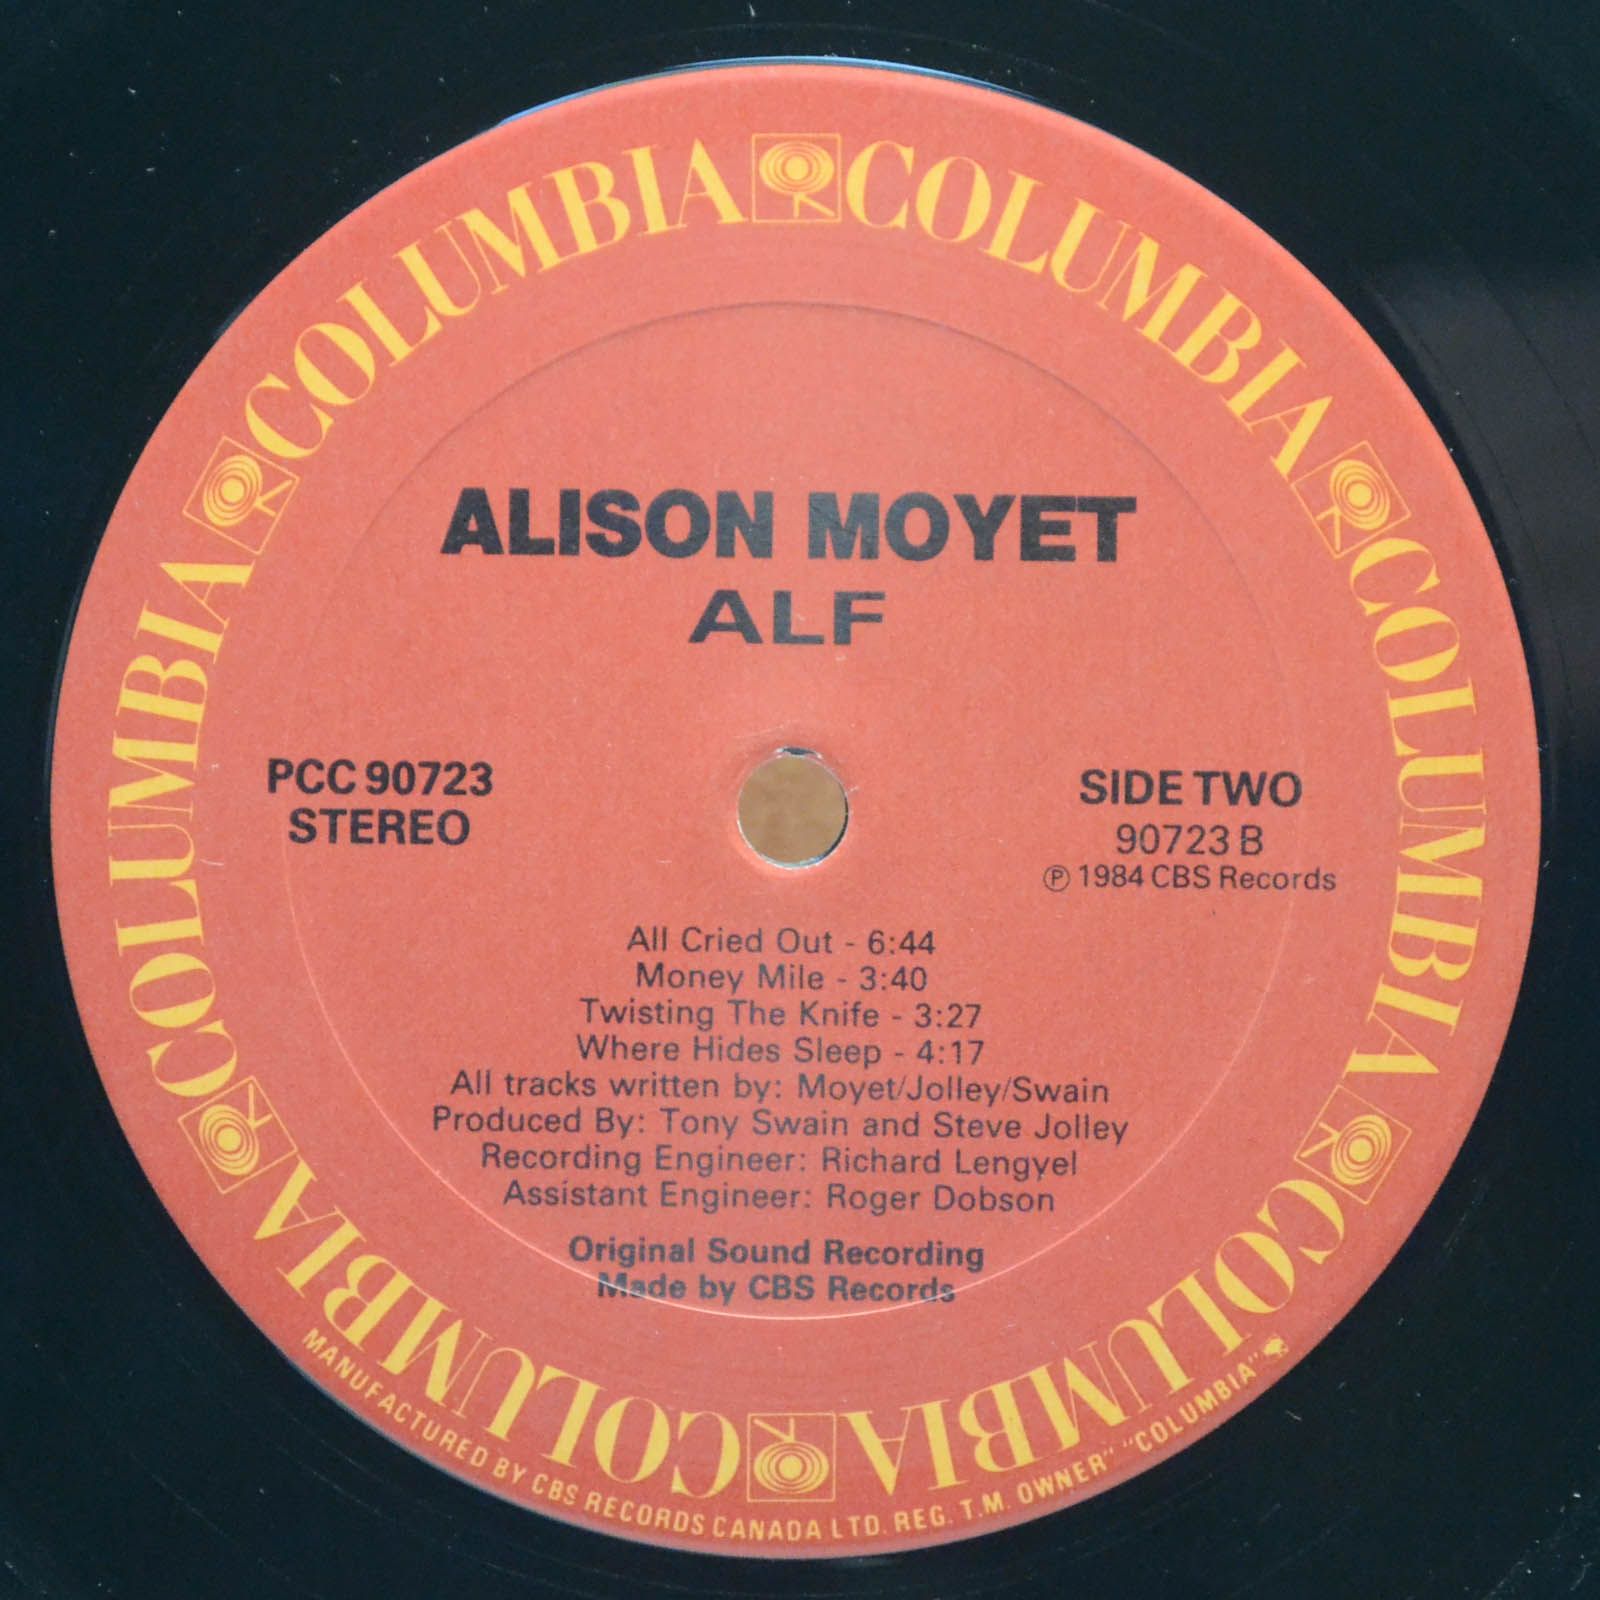 Alison Moyet — Alf, 1985